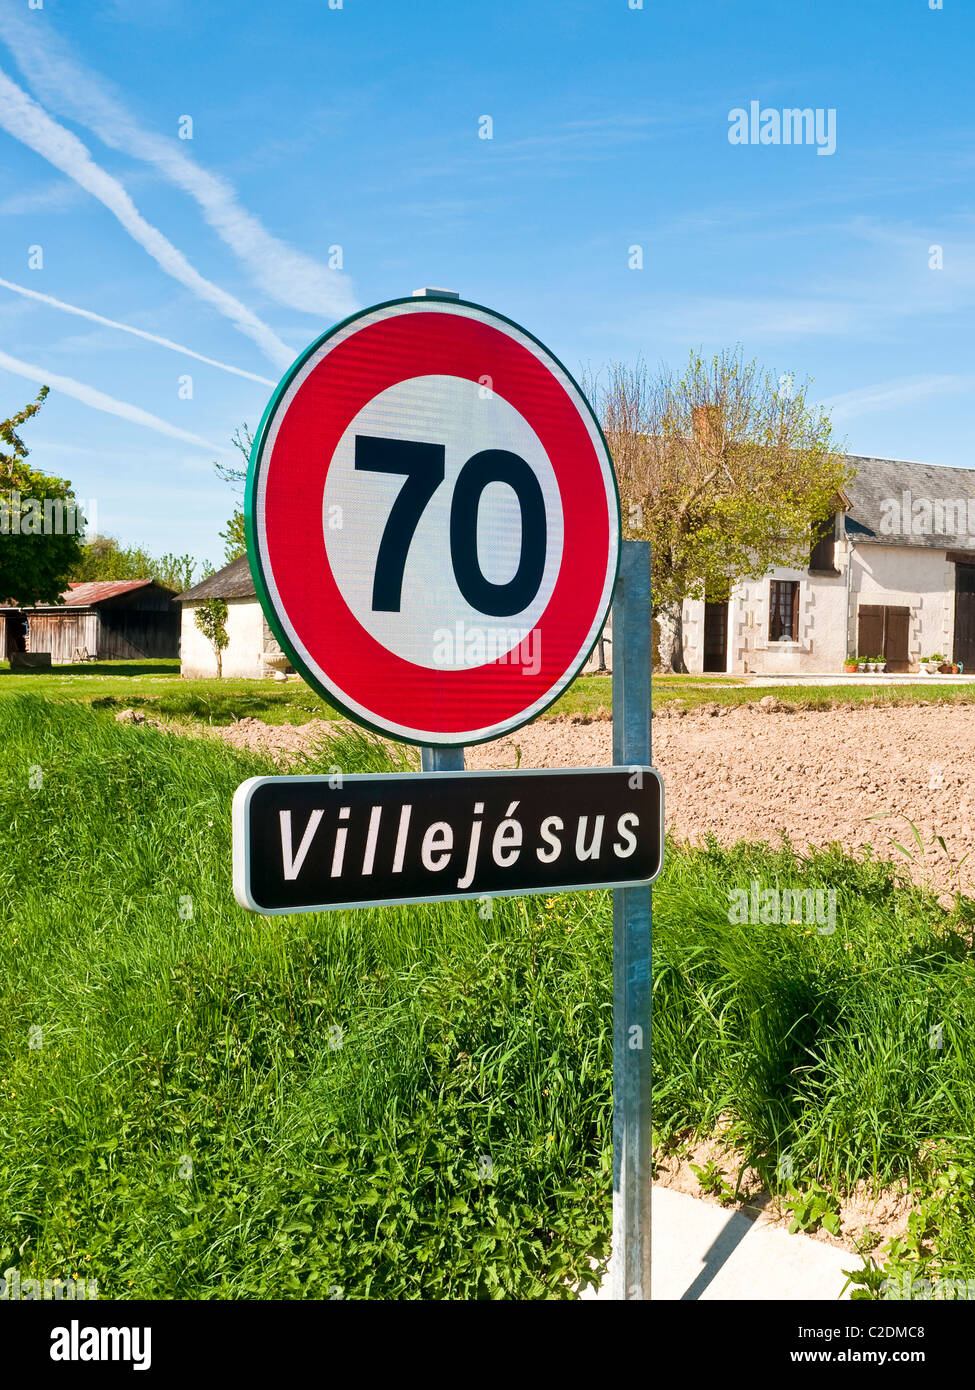 Modern 70 kph speed restriction road sign - Villejésus, Indre-et-Loire, France. Stock Photo